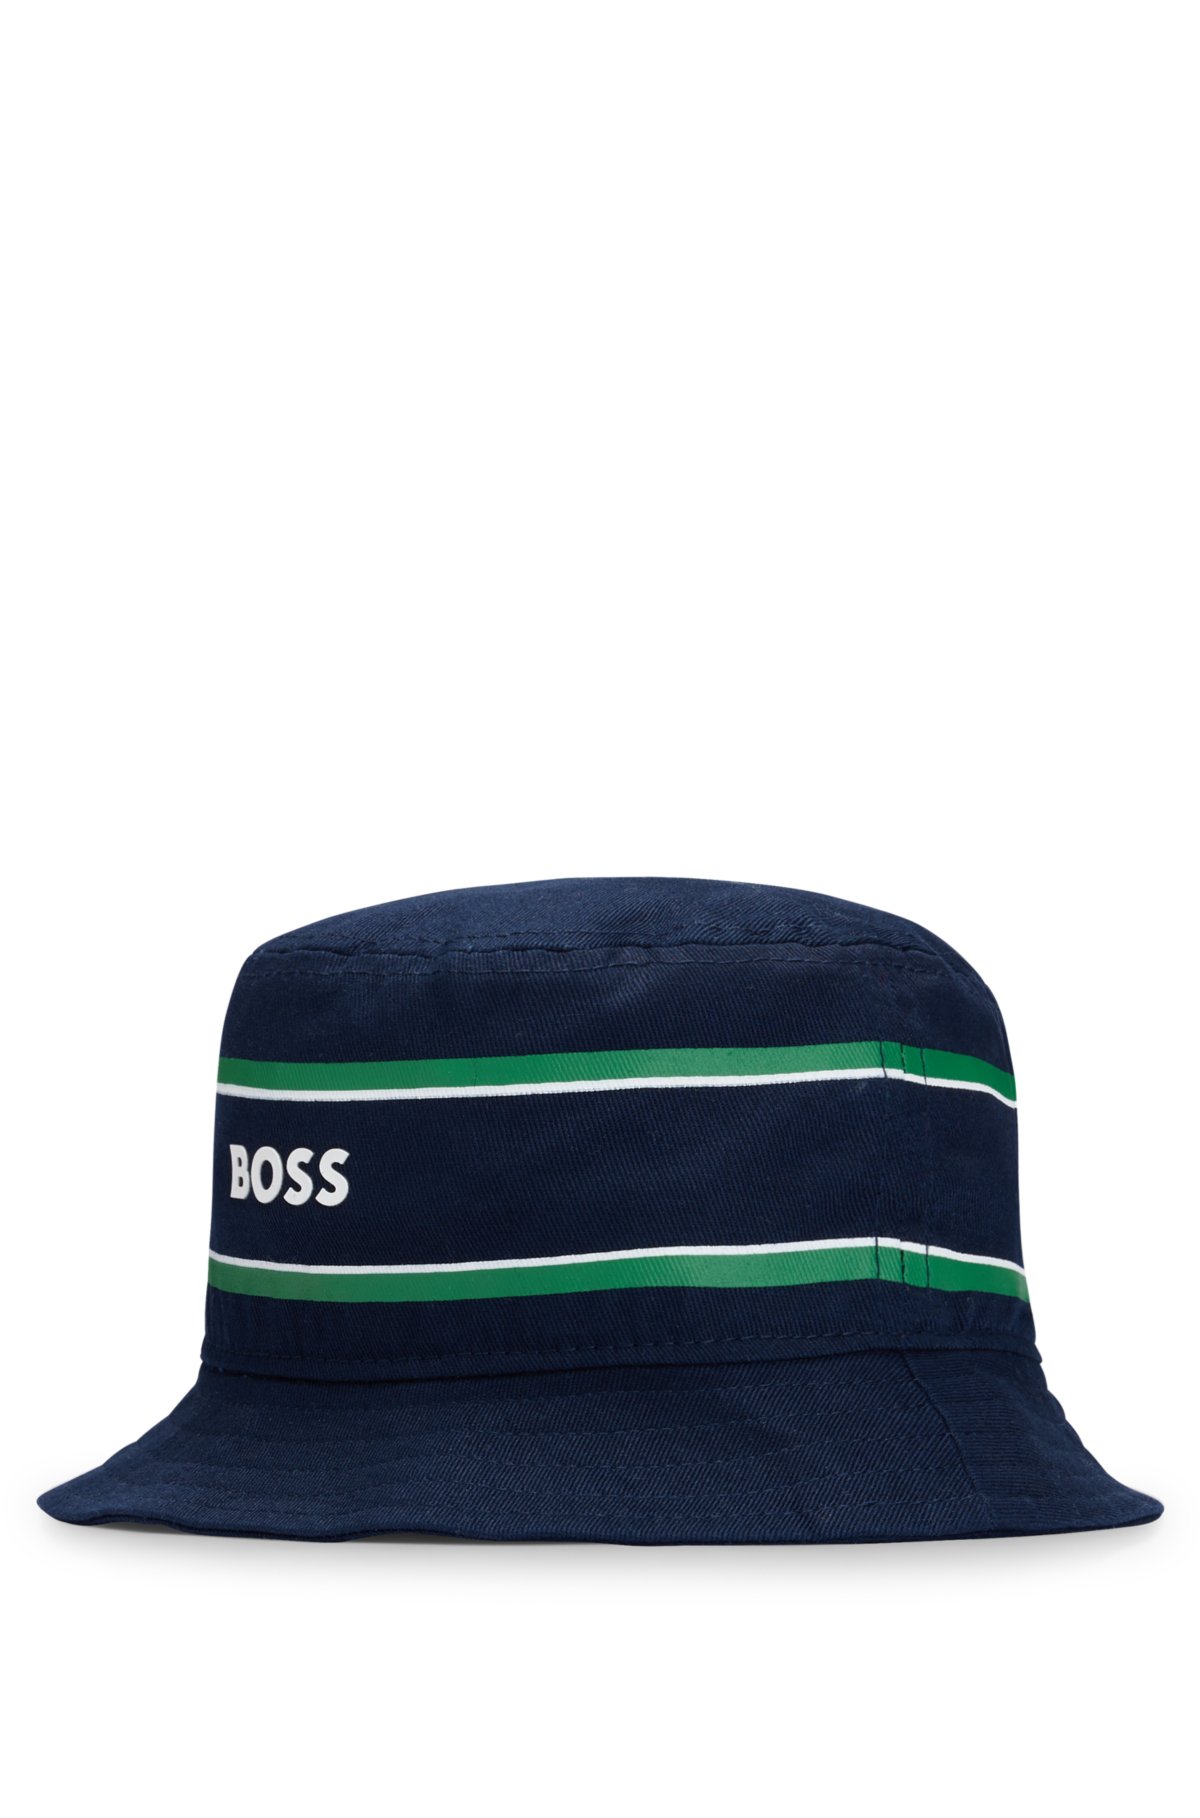 Kids' cotton-twill bucket hat with stripes and logo, Dark Blue